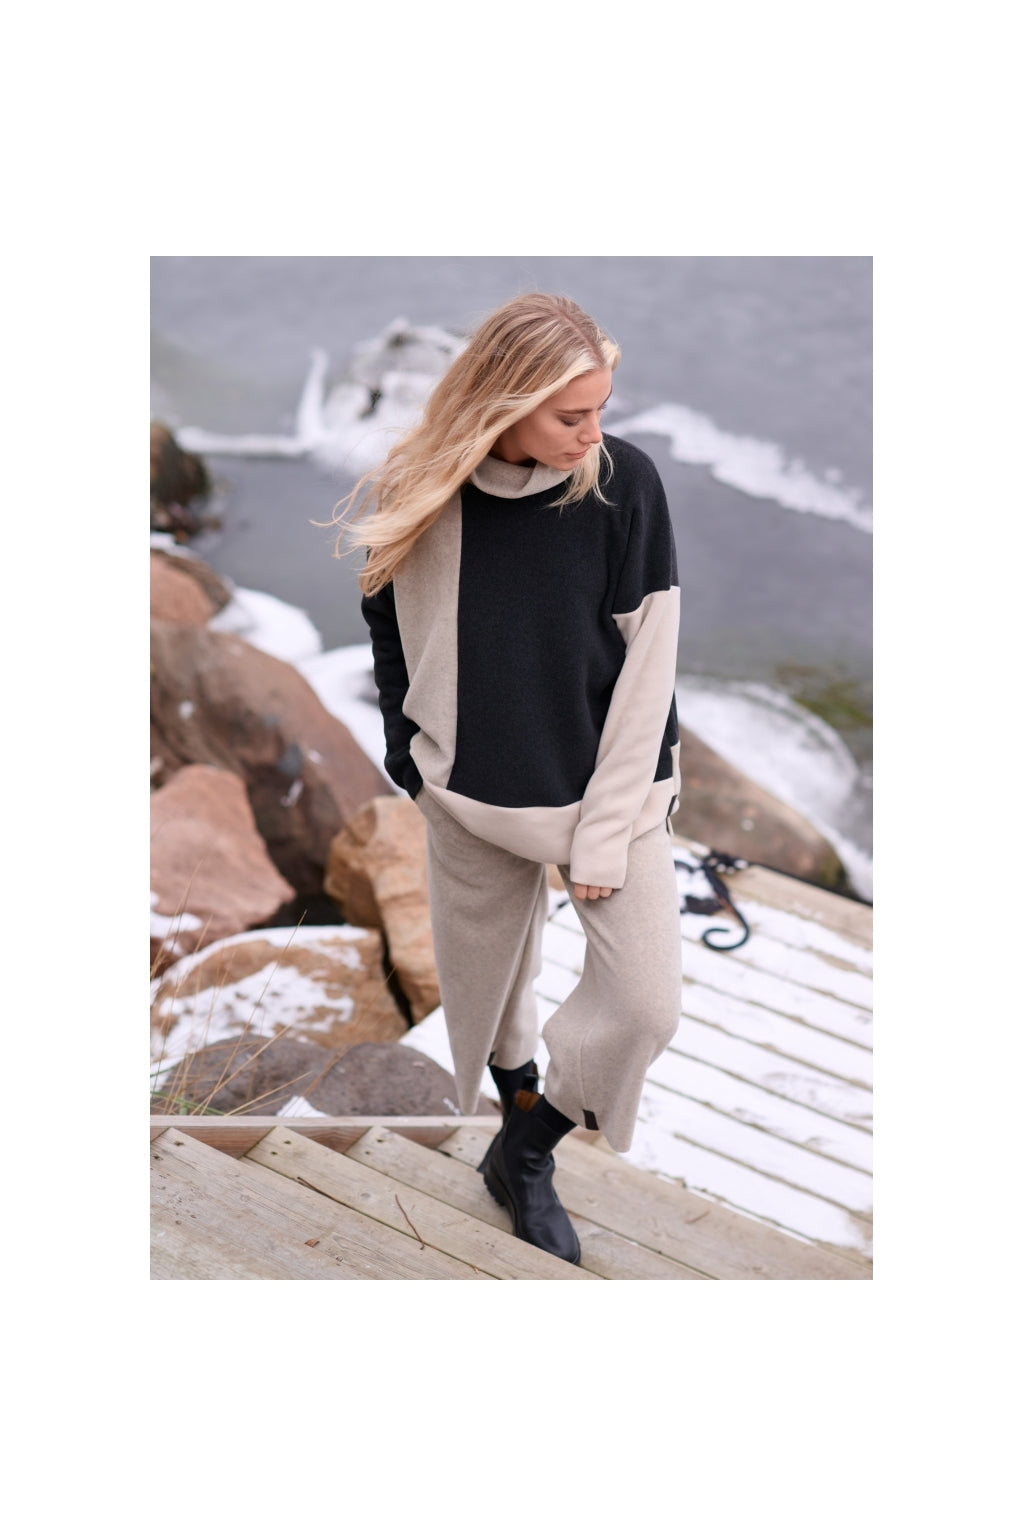 Henriette Steffensen Fleece Trousers in Sand-Womens-Ohh! By Gum - Shop Sustainable